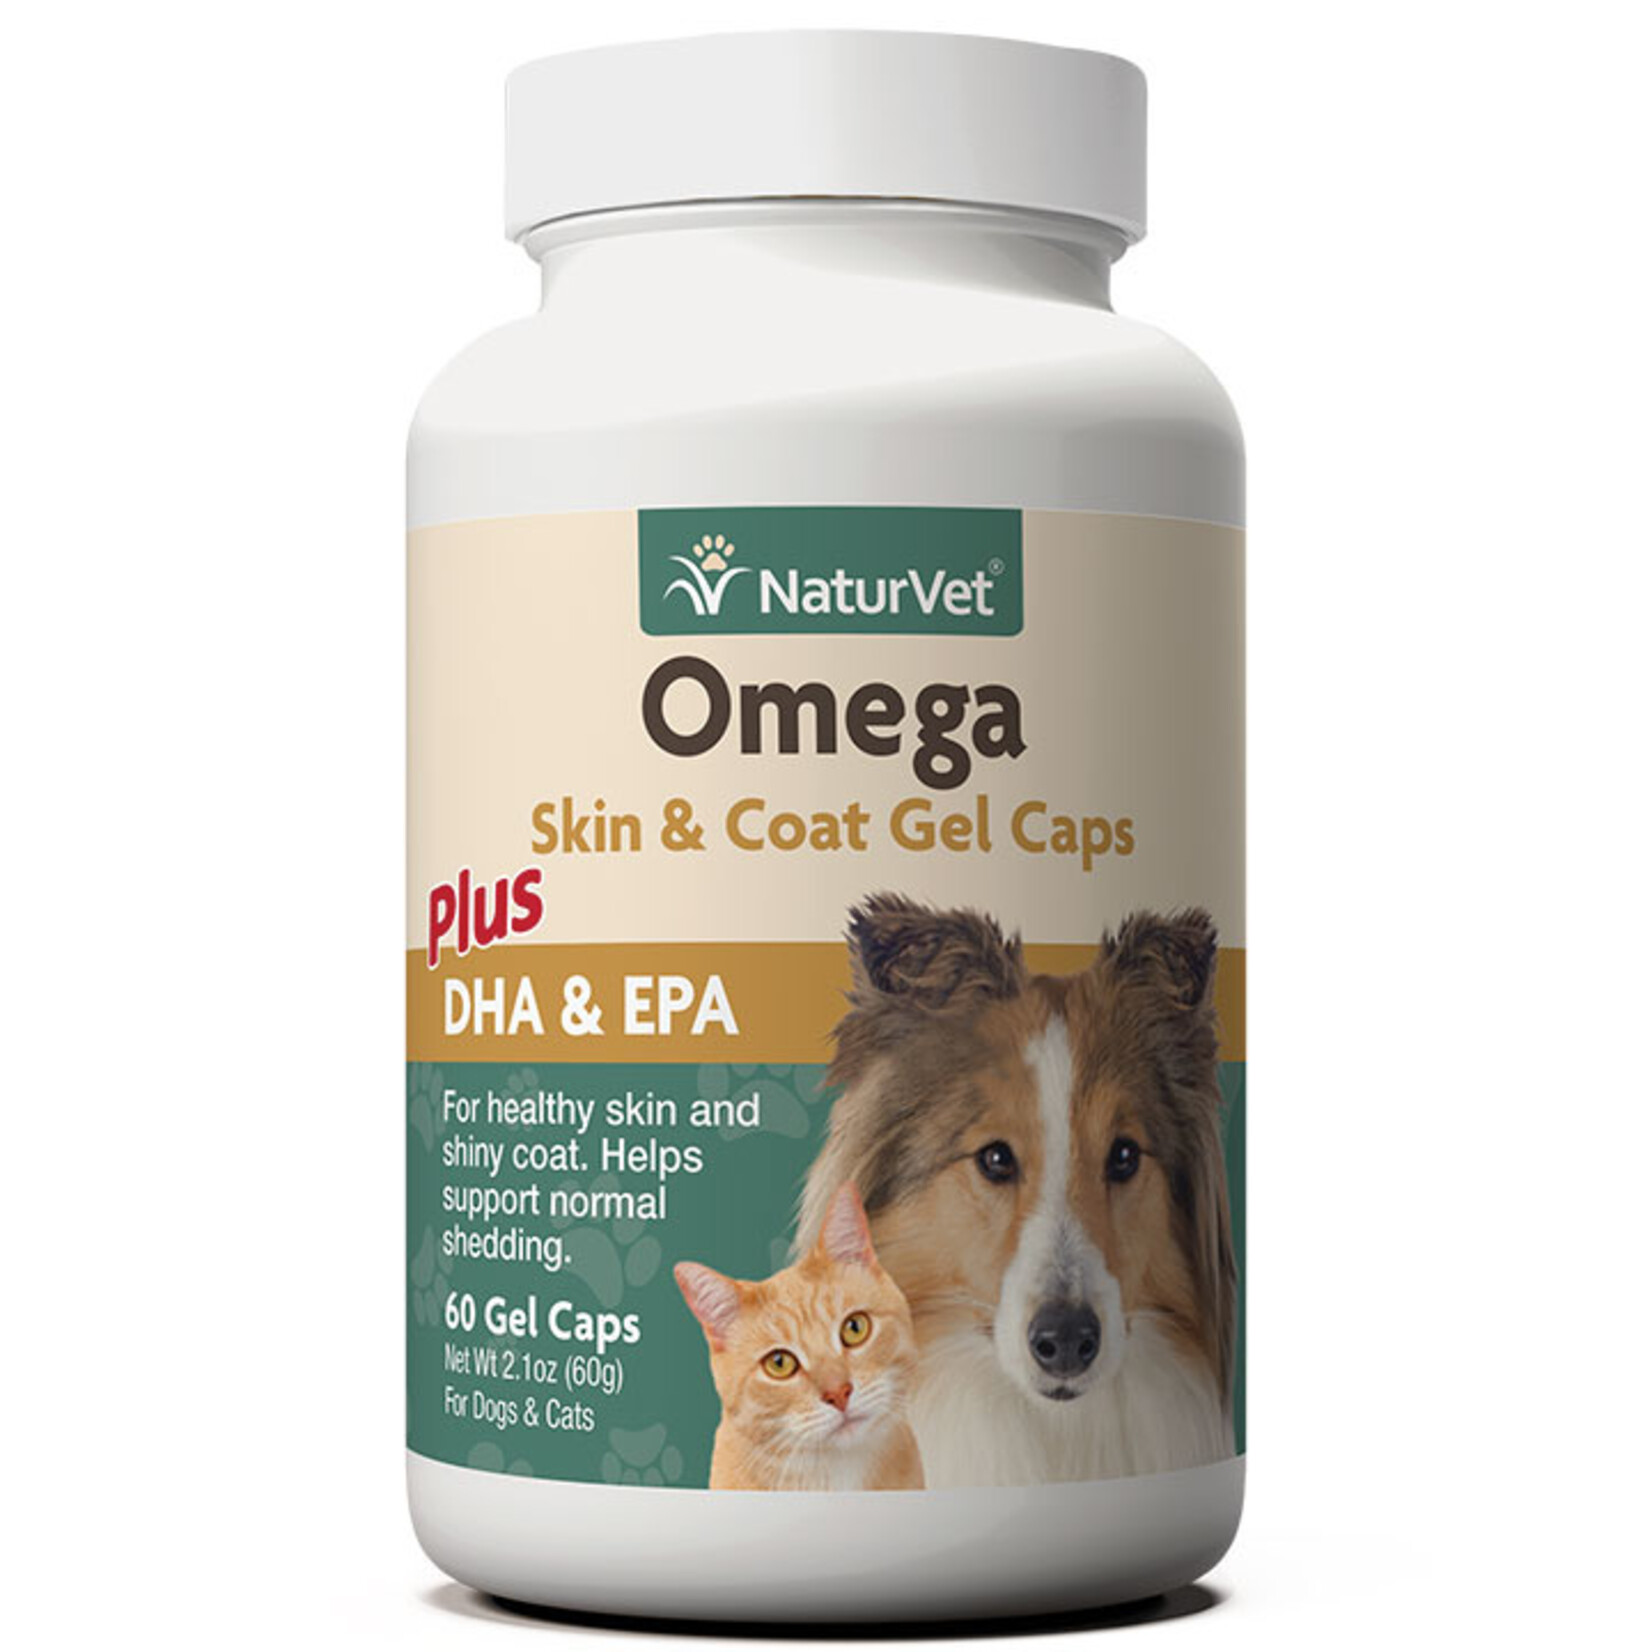 naturVet NaturVet Omega Skin & Coat Gel Caps plus DHA & EPA for Dogs and Cats 60 ct